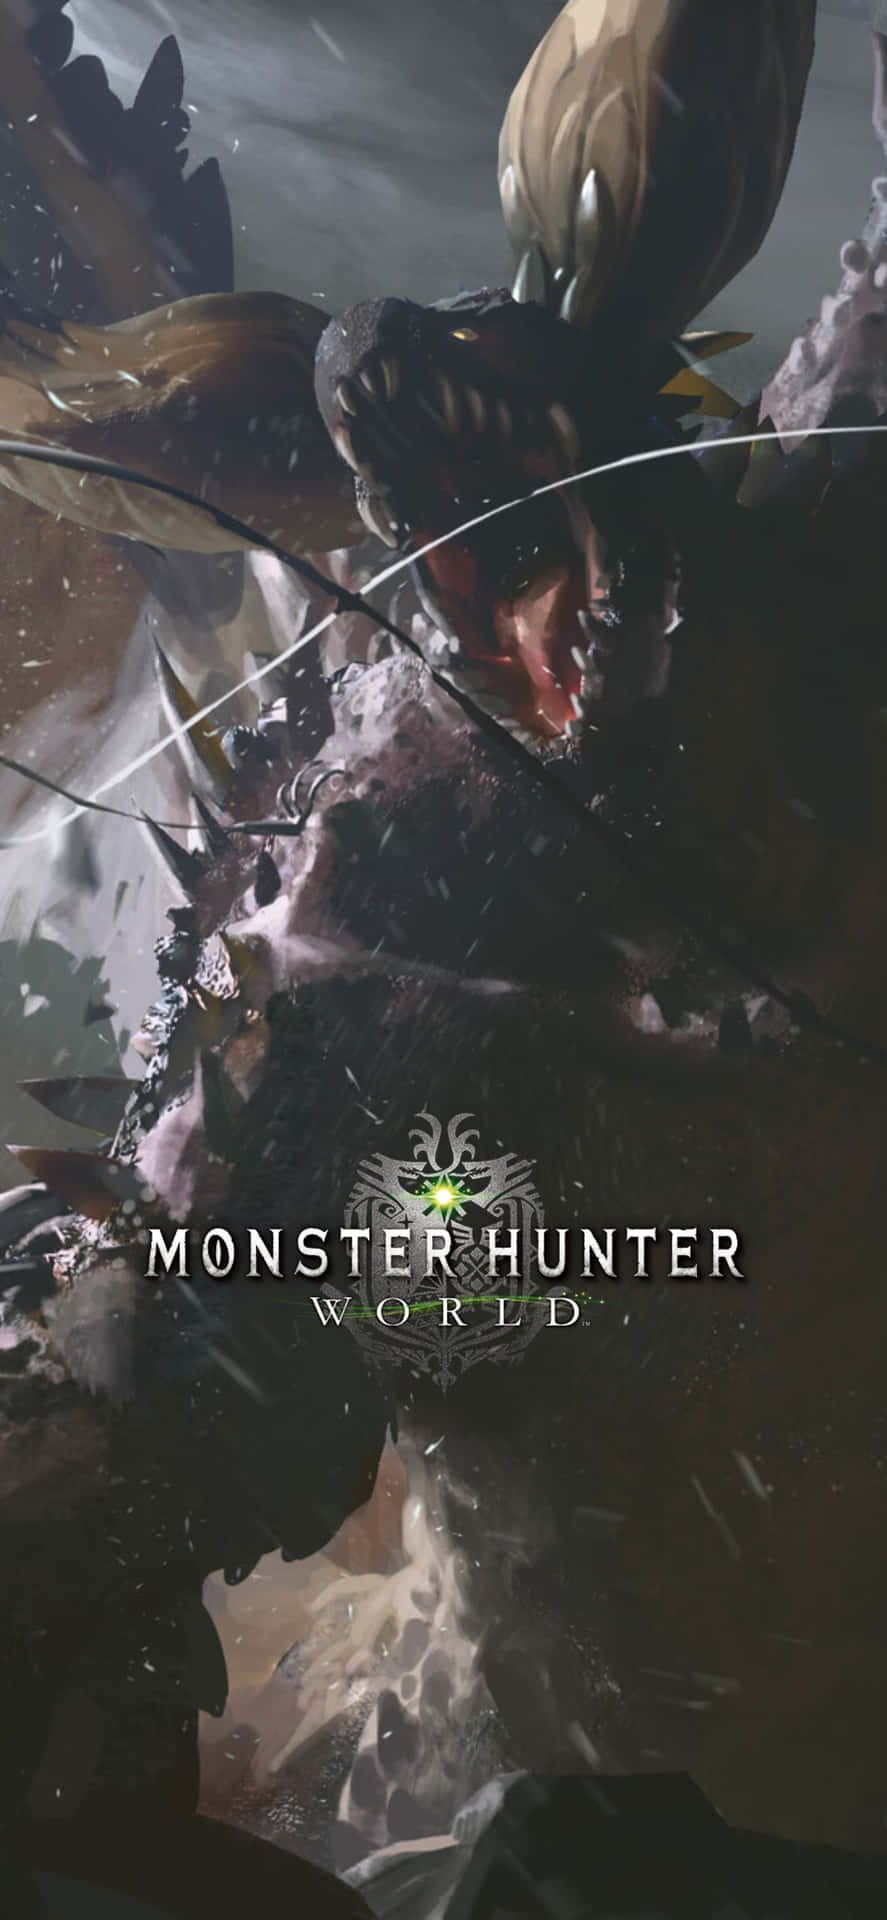 Fondode Pantalla De Lunastra De Monster Hunter World Para Iphone Xs Max.